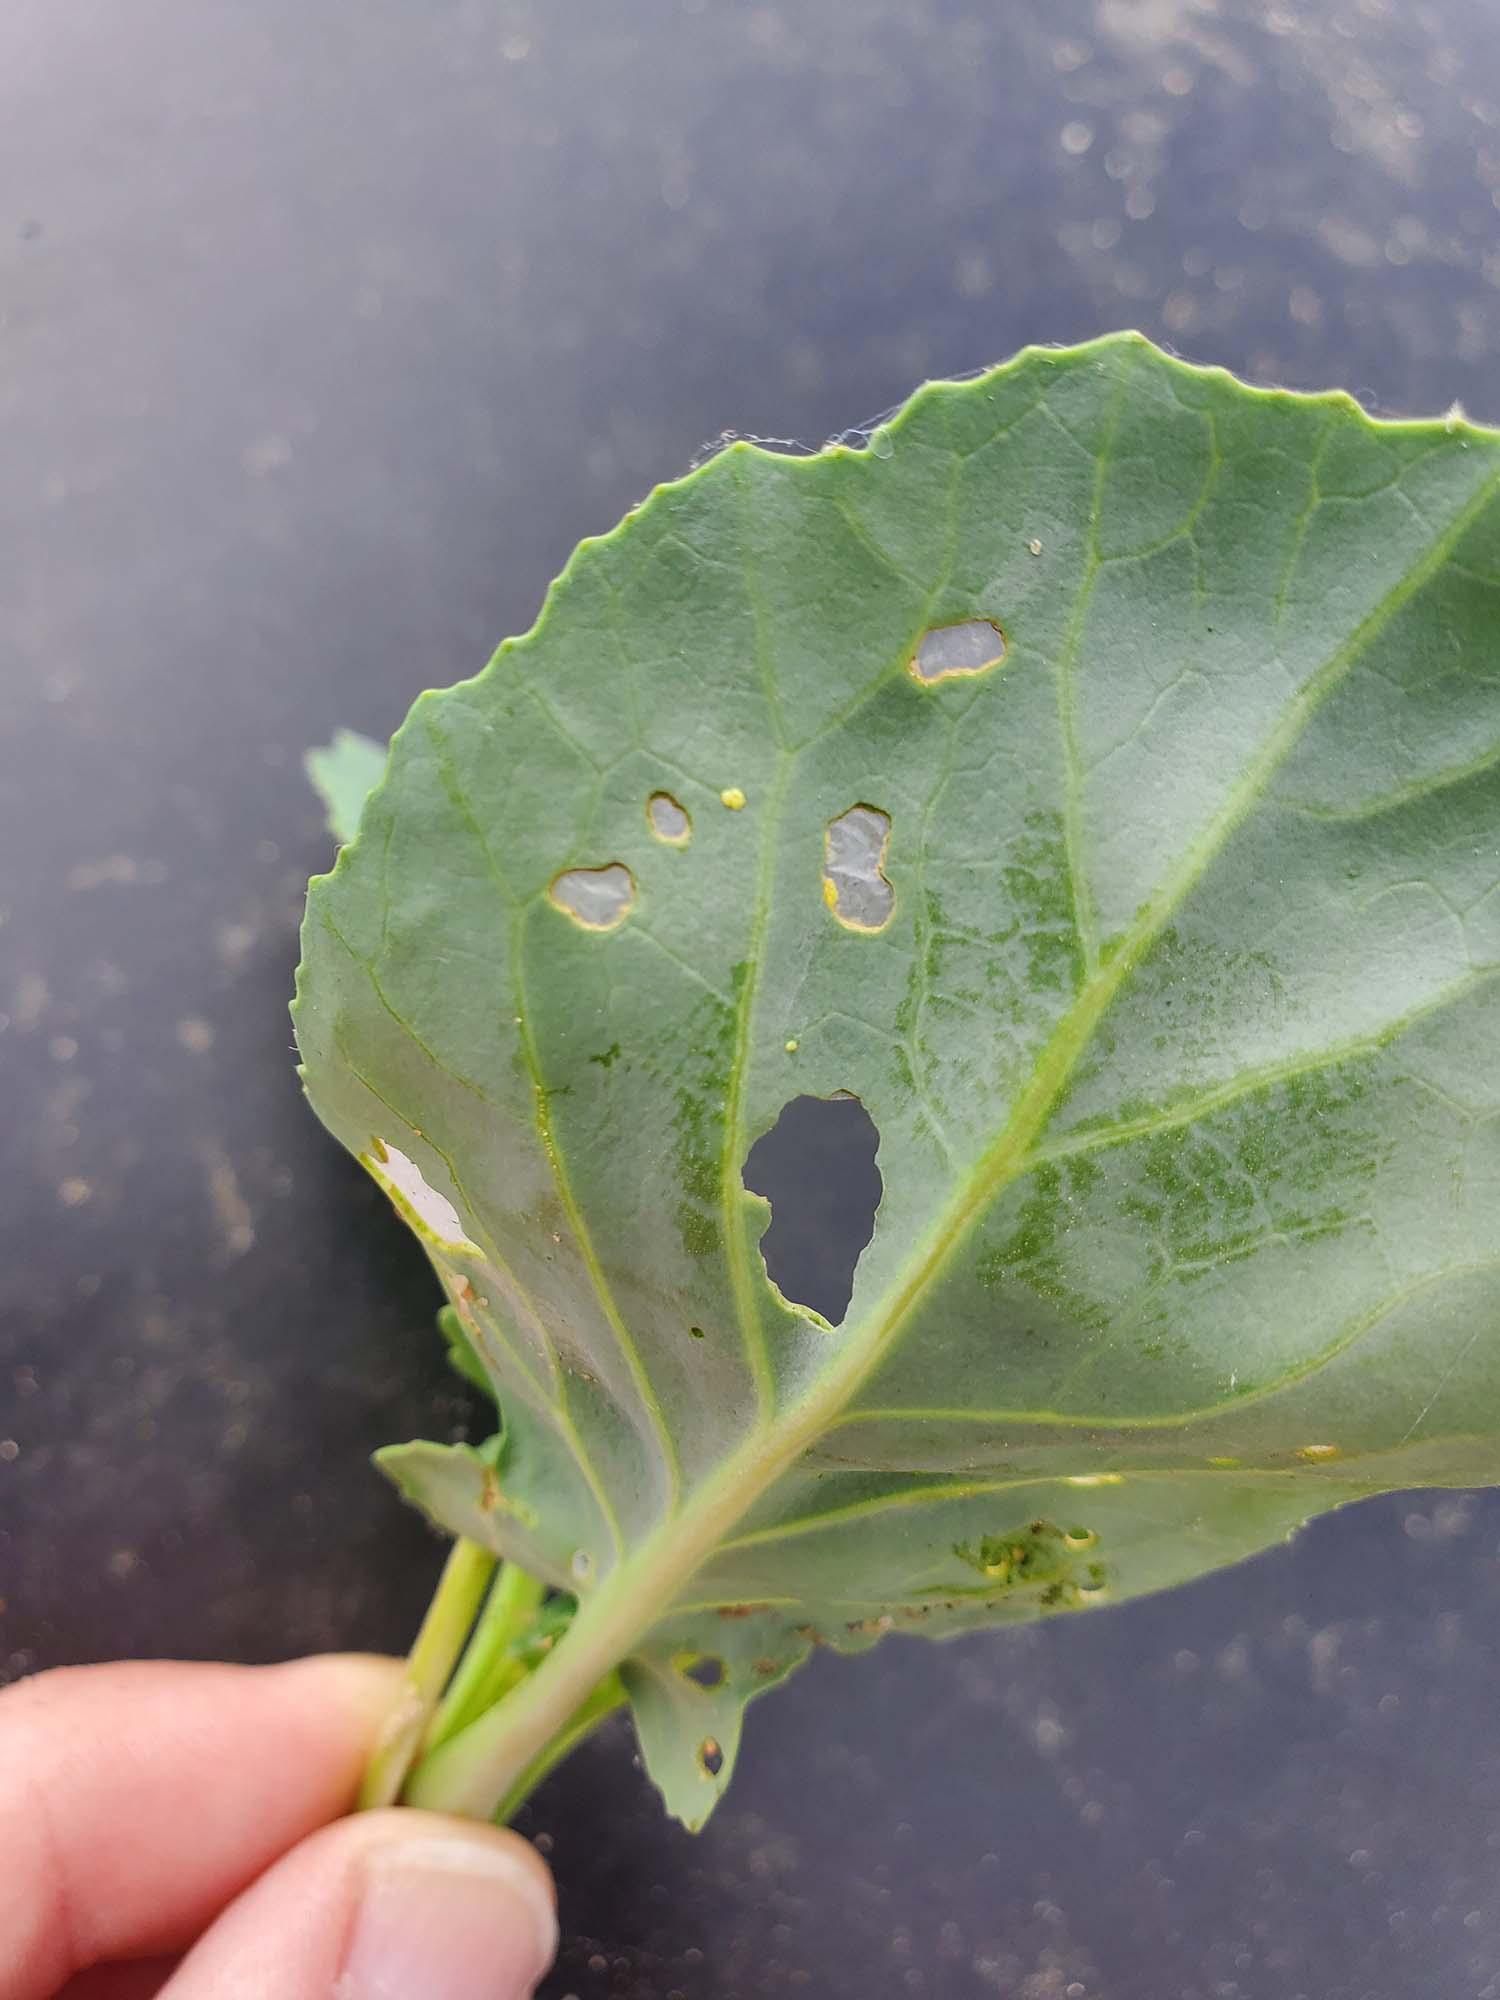 Cucumber beetle damage to leaf